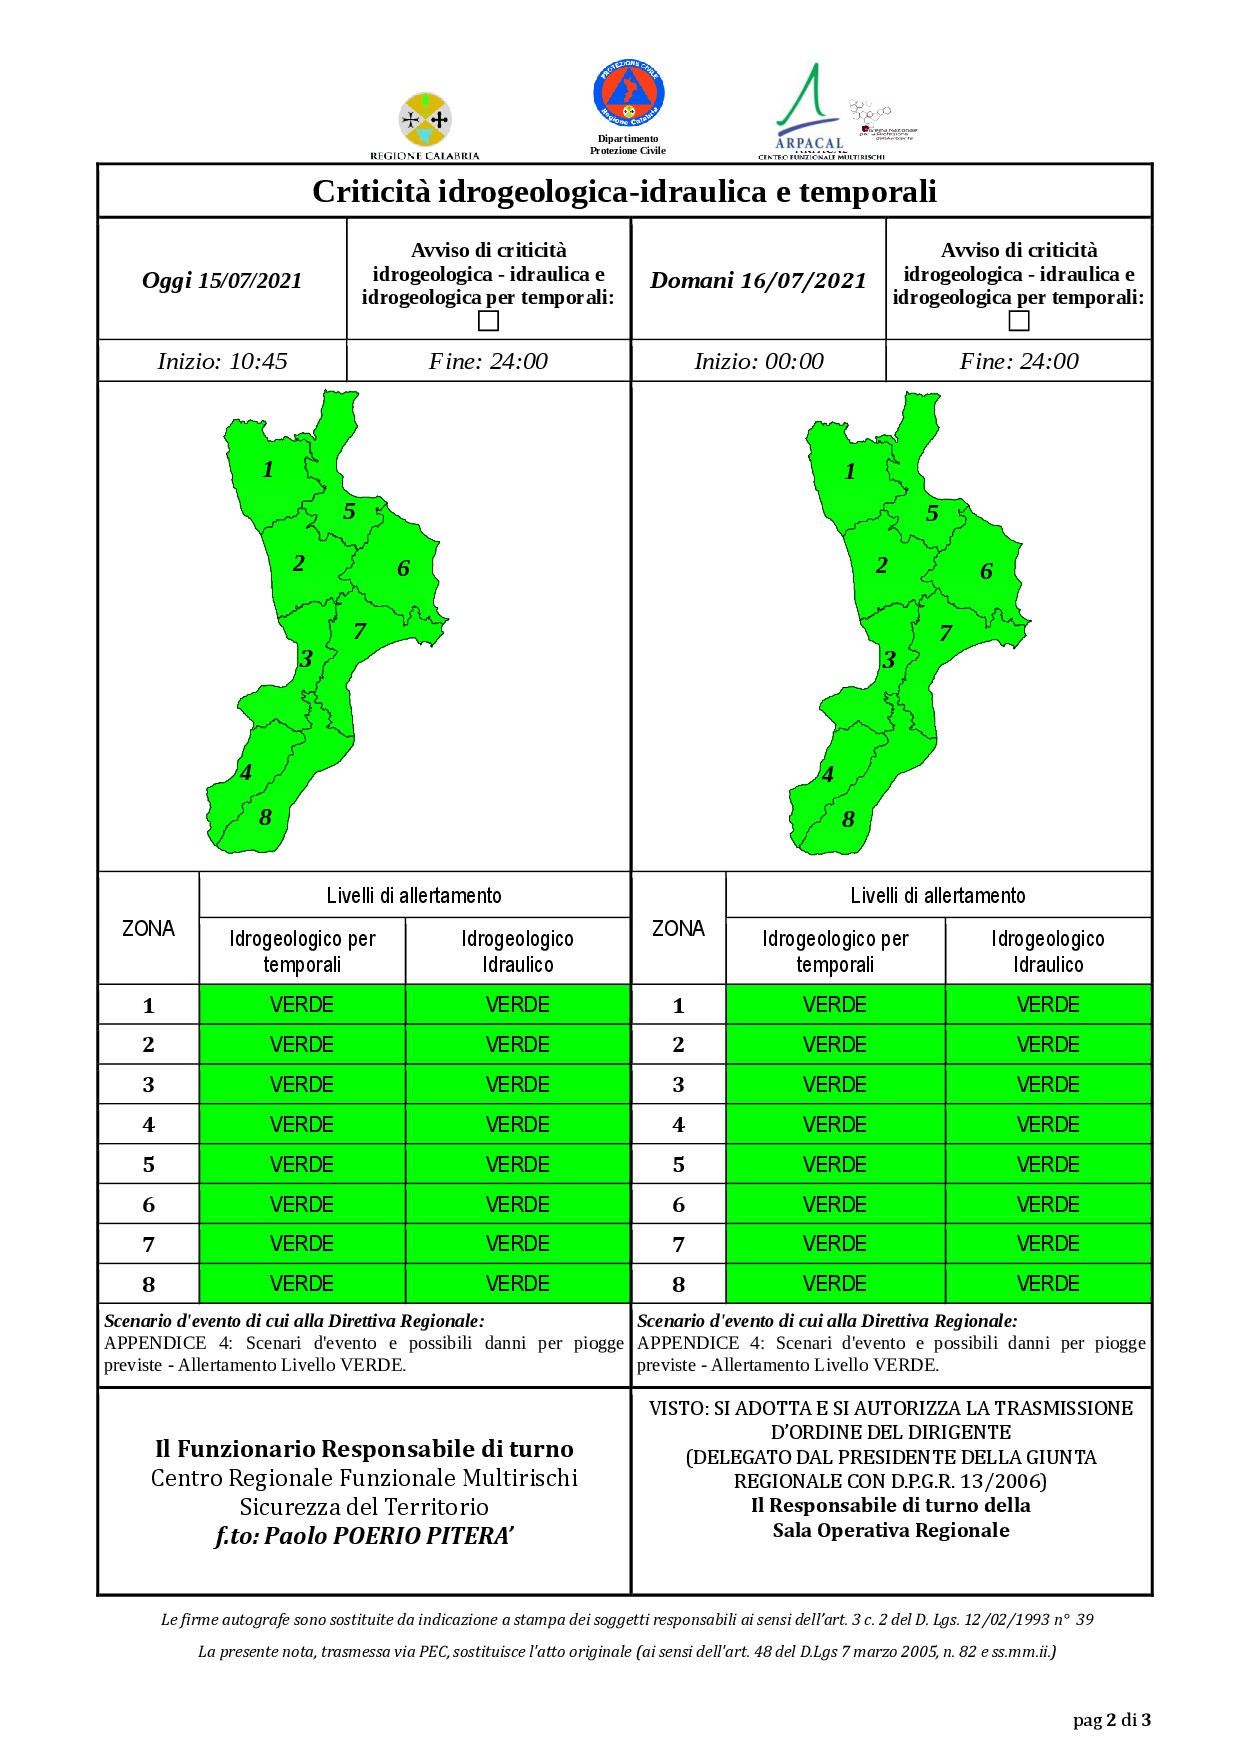 Criticità idrogeologica-idraulica e temporali in Calabria 15-07-2021